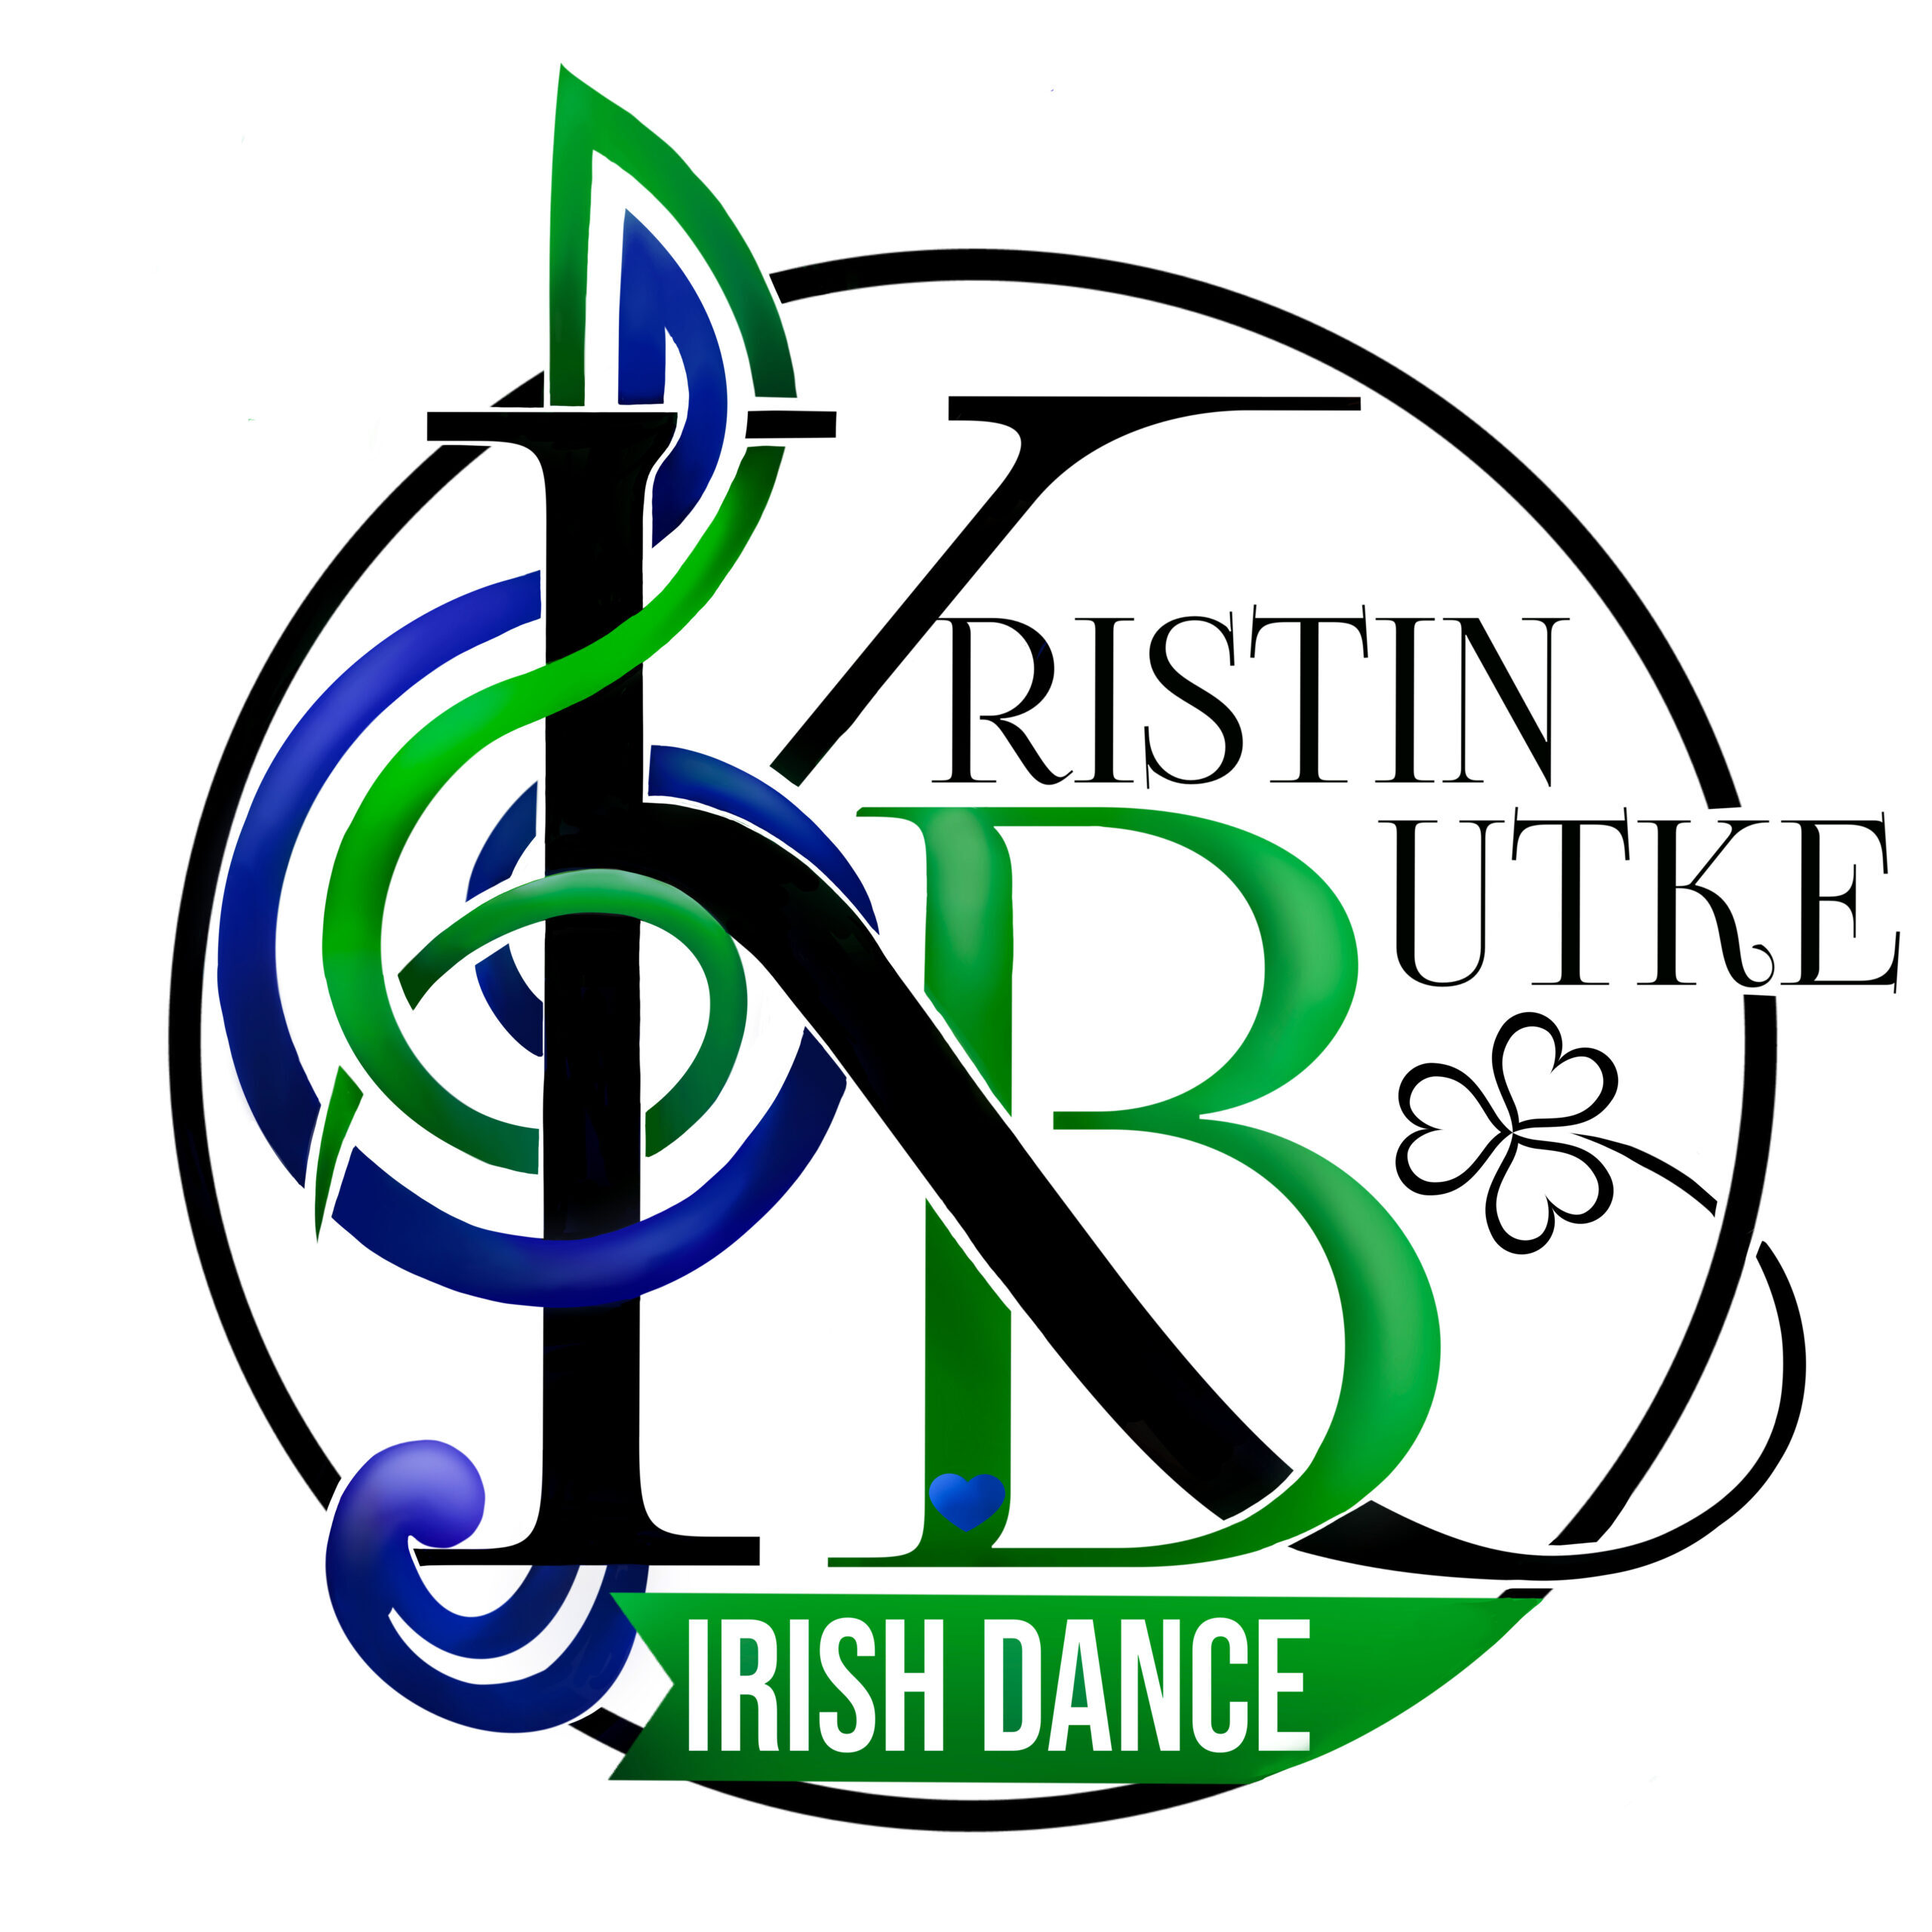 Kristin Butke Irish Dance